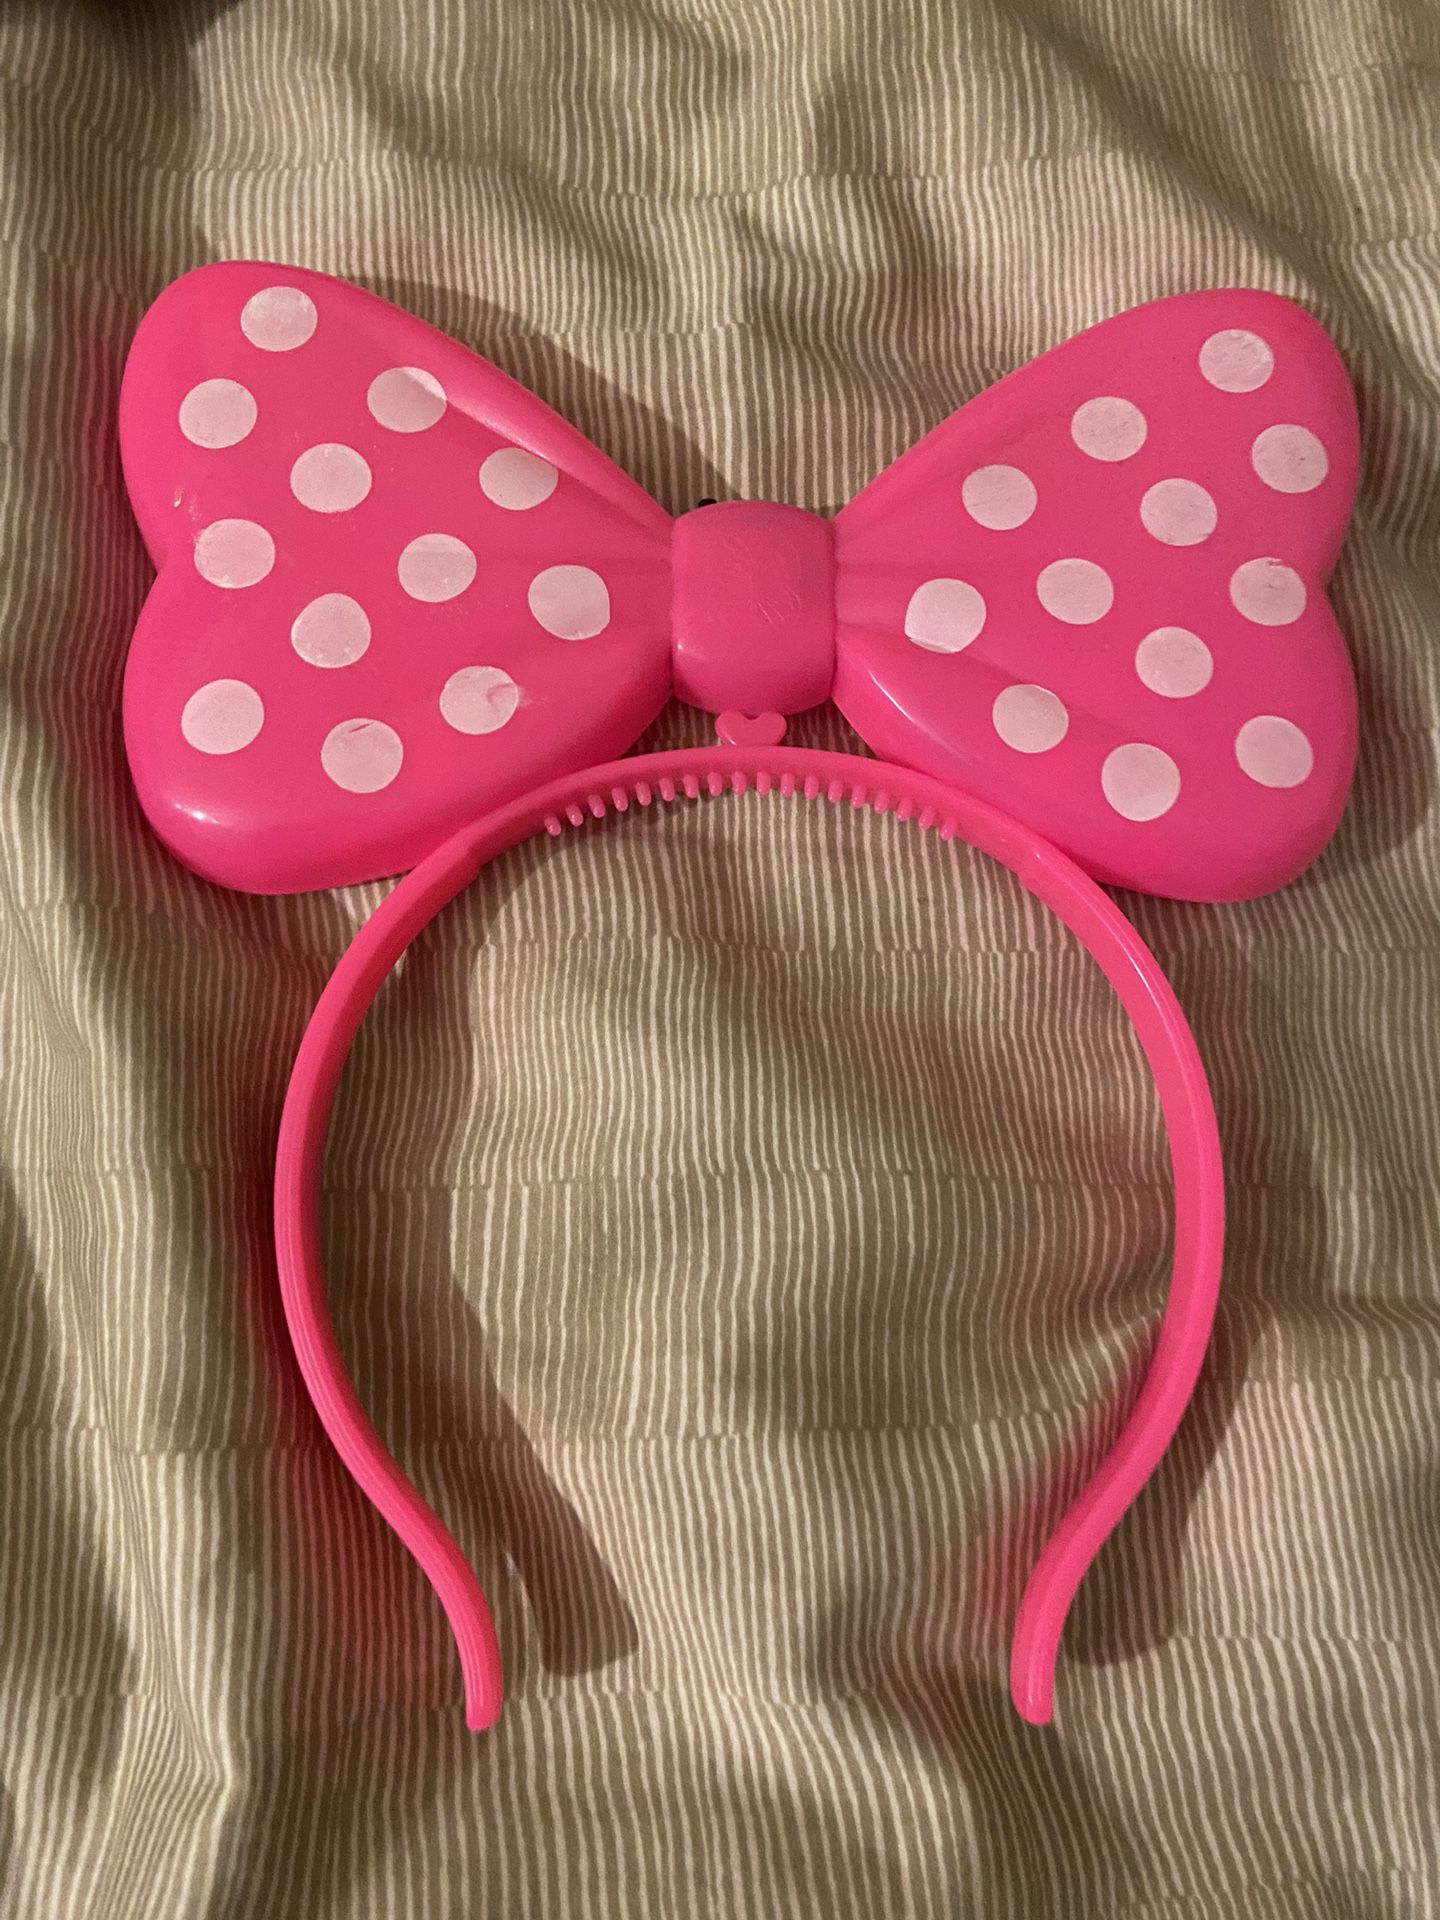 Light Up Minnie Mouse Ears